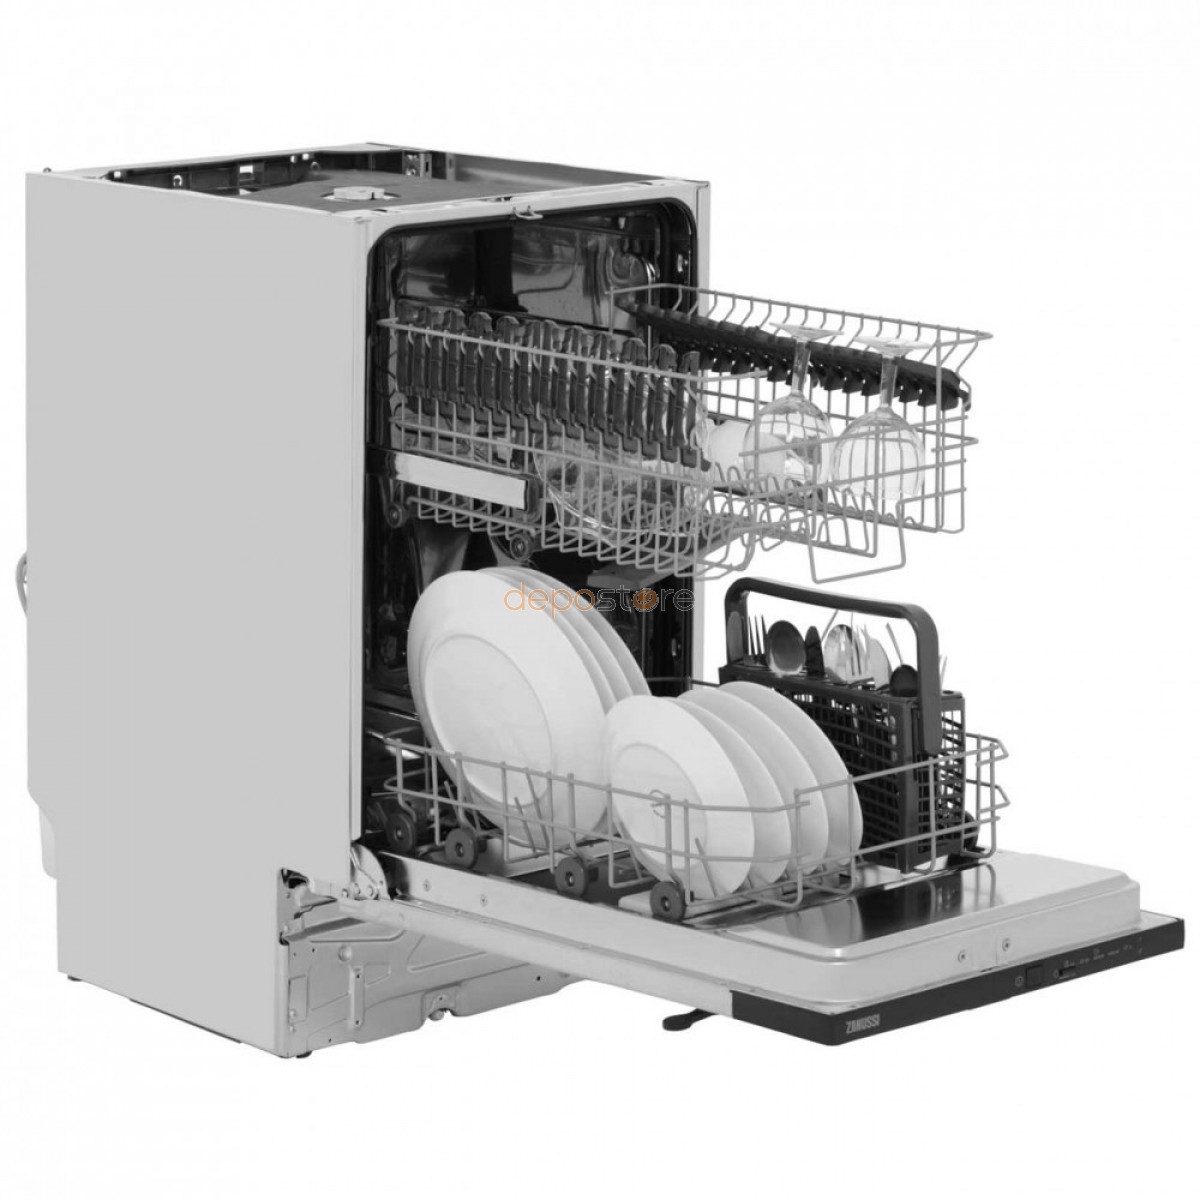 Машина haier hdwe13 191ru. Посудомоечная машина Zanussi ZDV 15001 fa. Посудомоечная машина Zanussi ZDV 14001 fa. Занусси посудомоечная машина встраиваемая 45 см. Посудомоечная машина Zanussi ZDV 912002 fa.